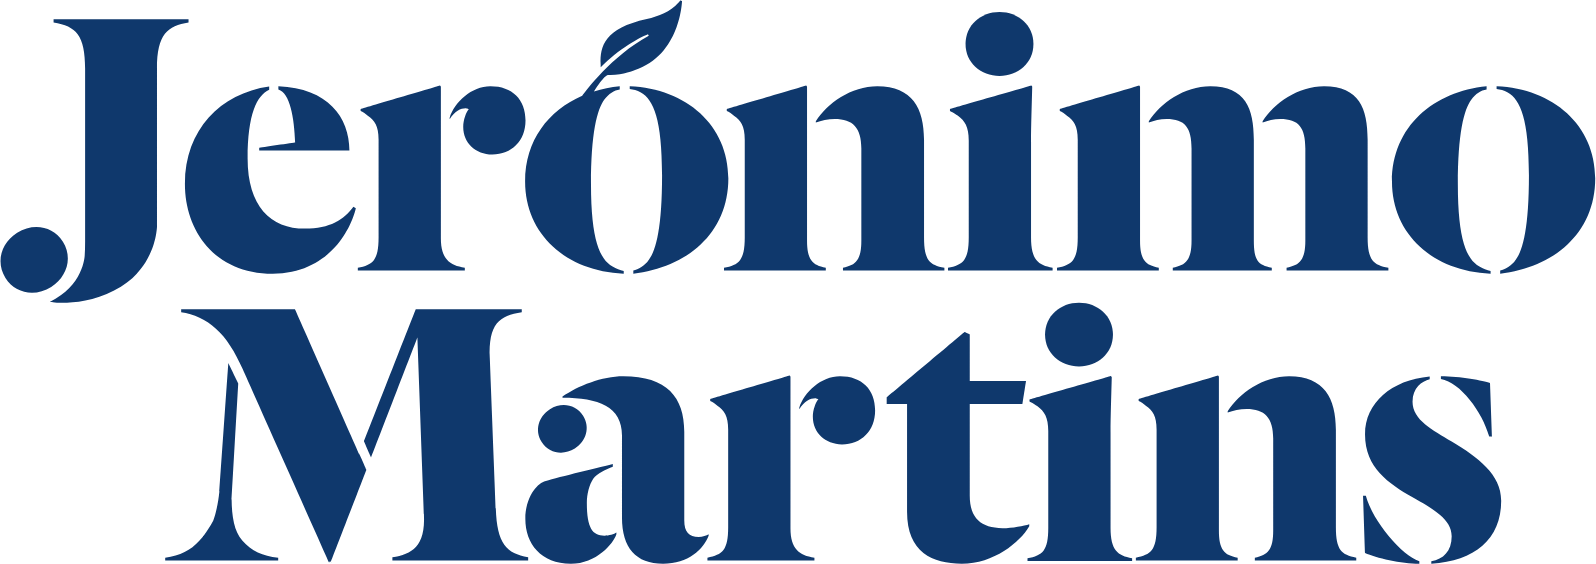 Jerónimo Martins
 logo large (transparent PNG)